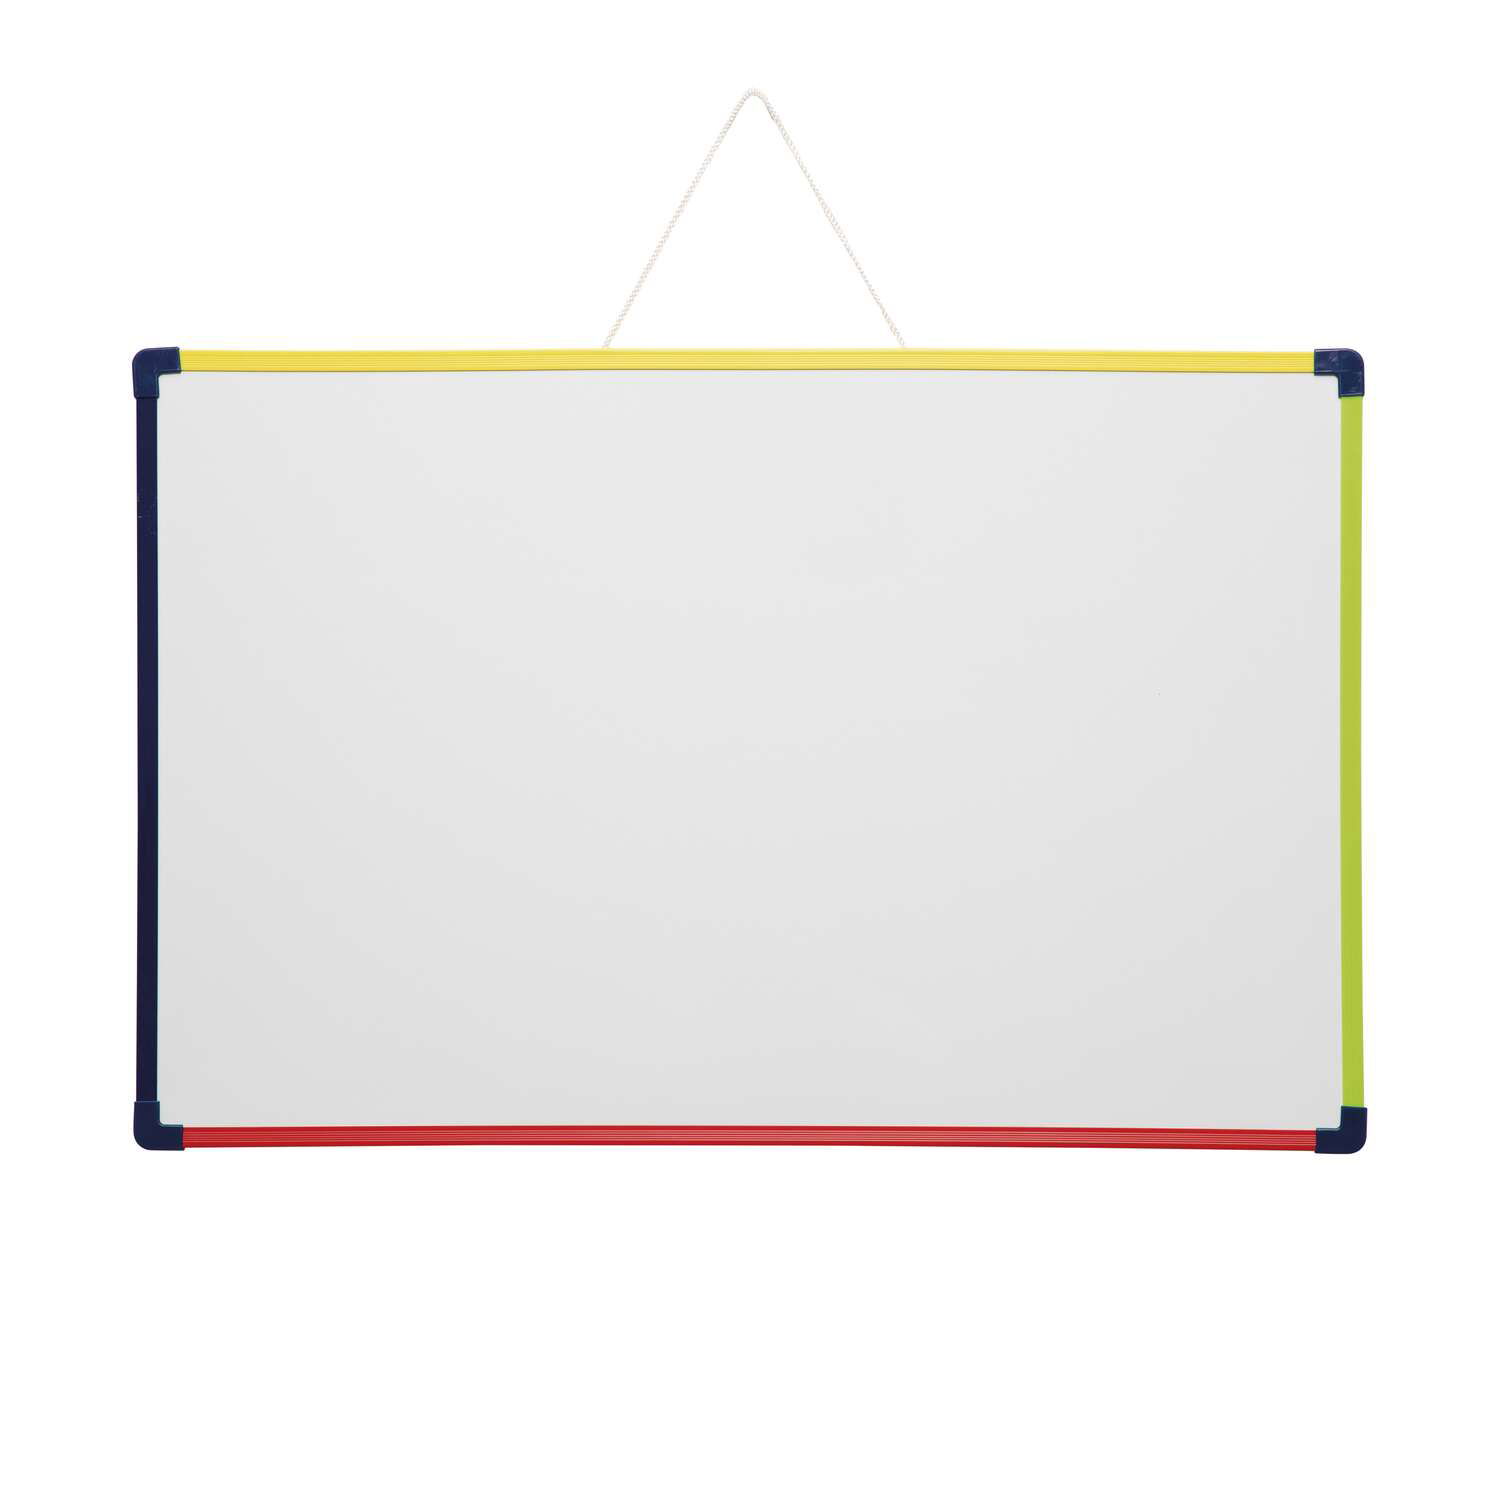 Whiteboard MAULfun, 38,5x58,5 cm, beidseitig verwendbar